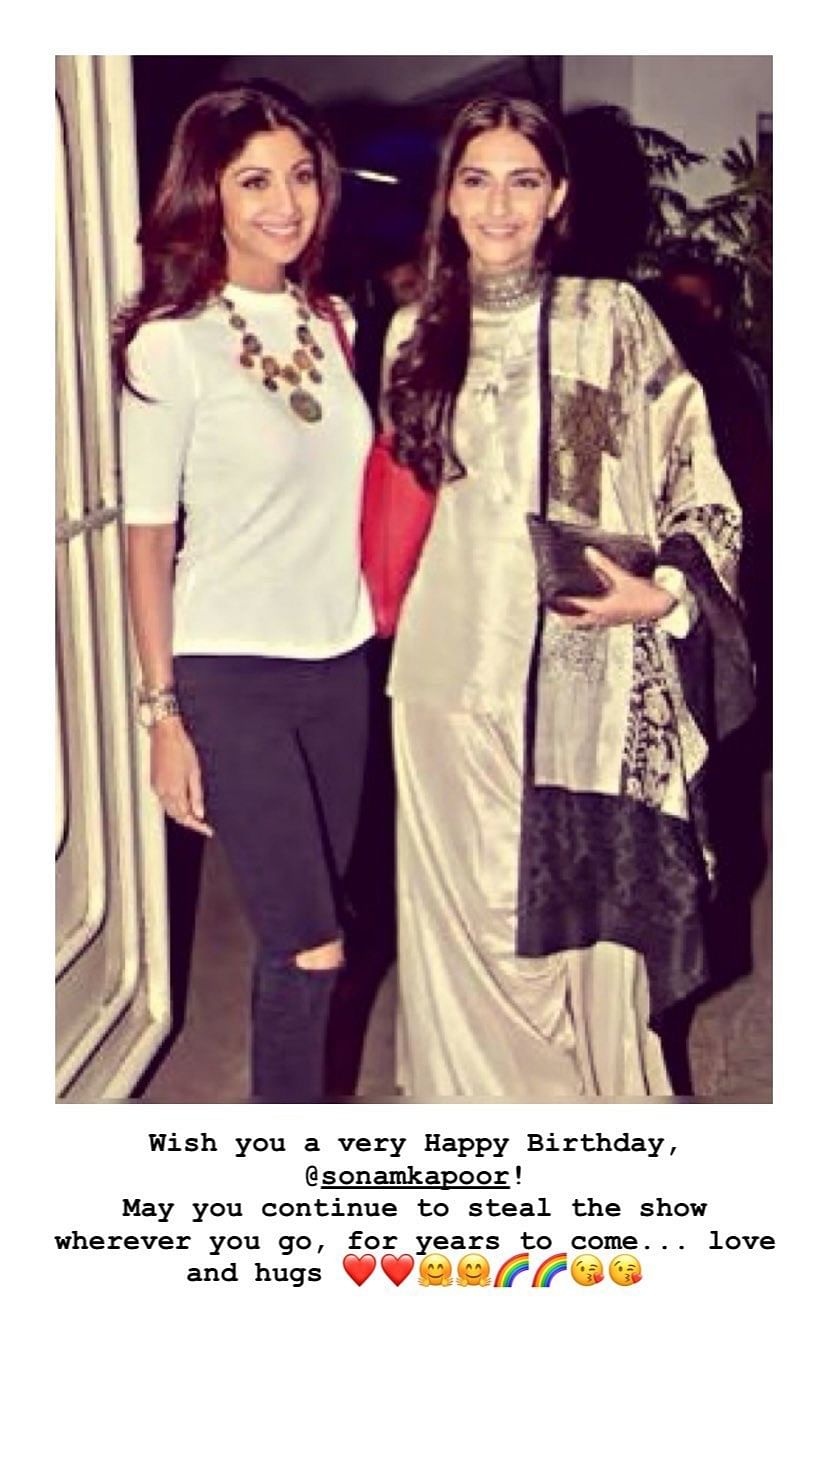 Sonam celebrated her birthday in Mumbai with her family. 